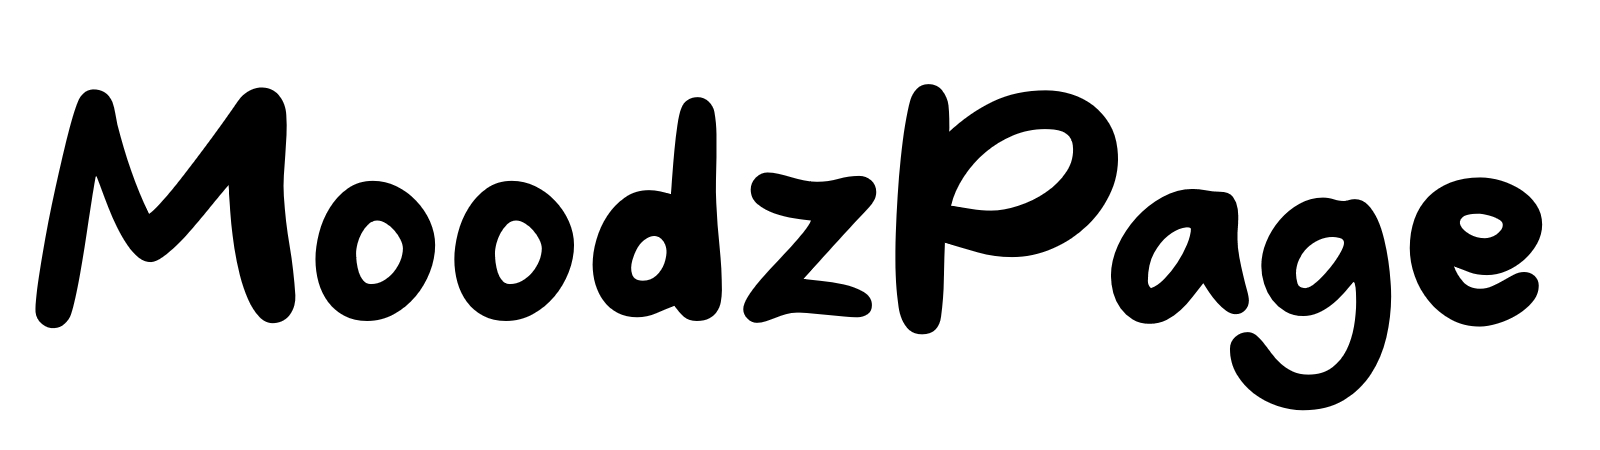 Moodzpage logo